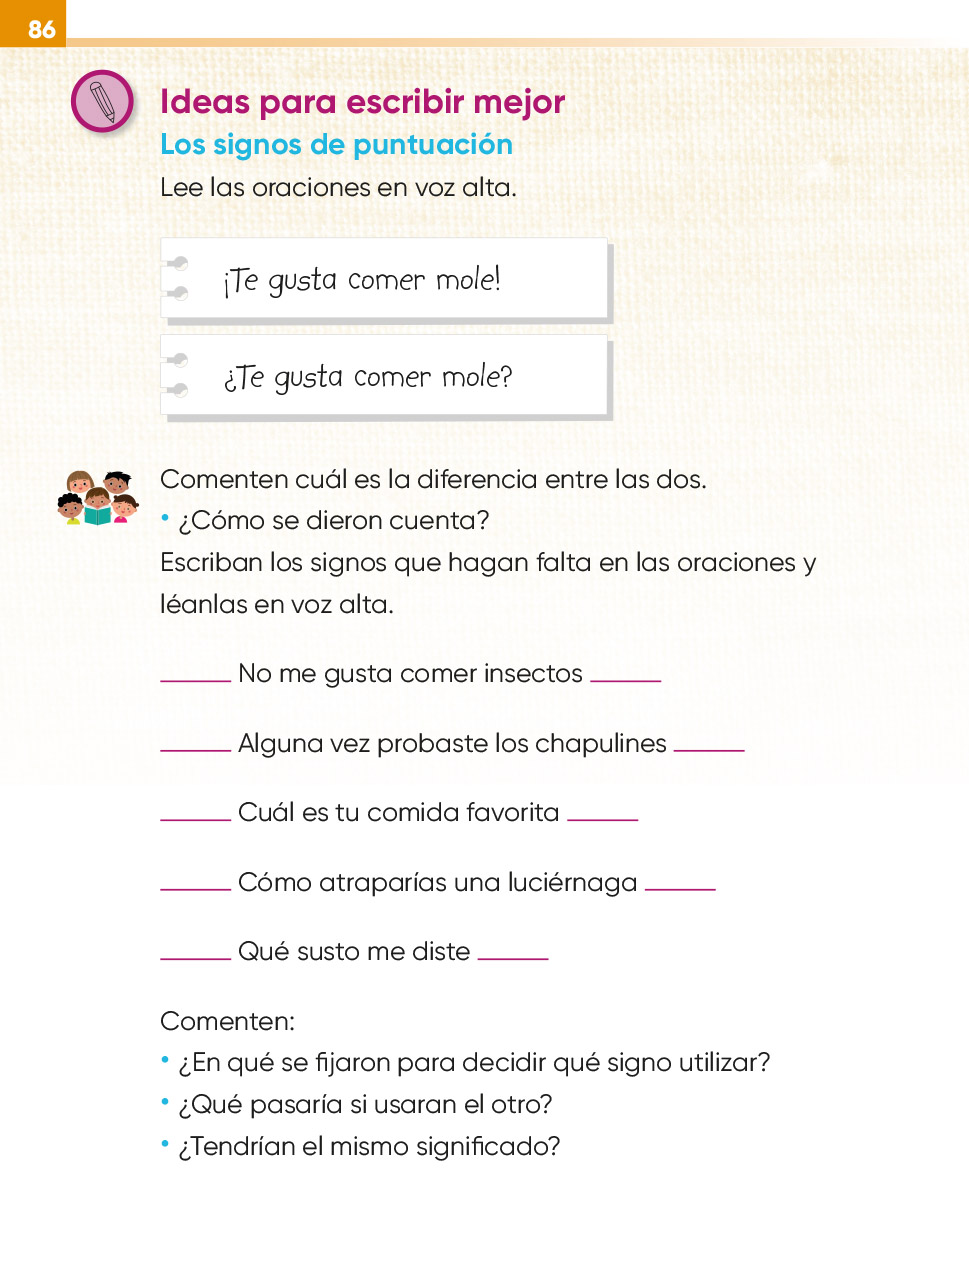 Lengua Materna Español Segundo Grado 2020 2021 Página 86 De 225 Libros De Texto Online 0966